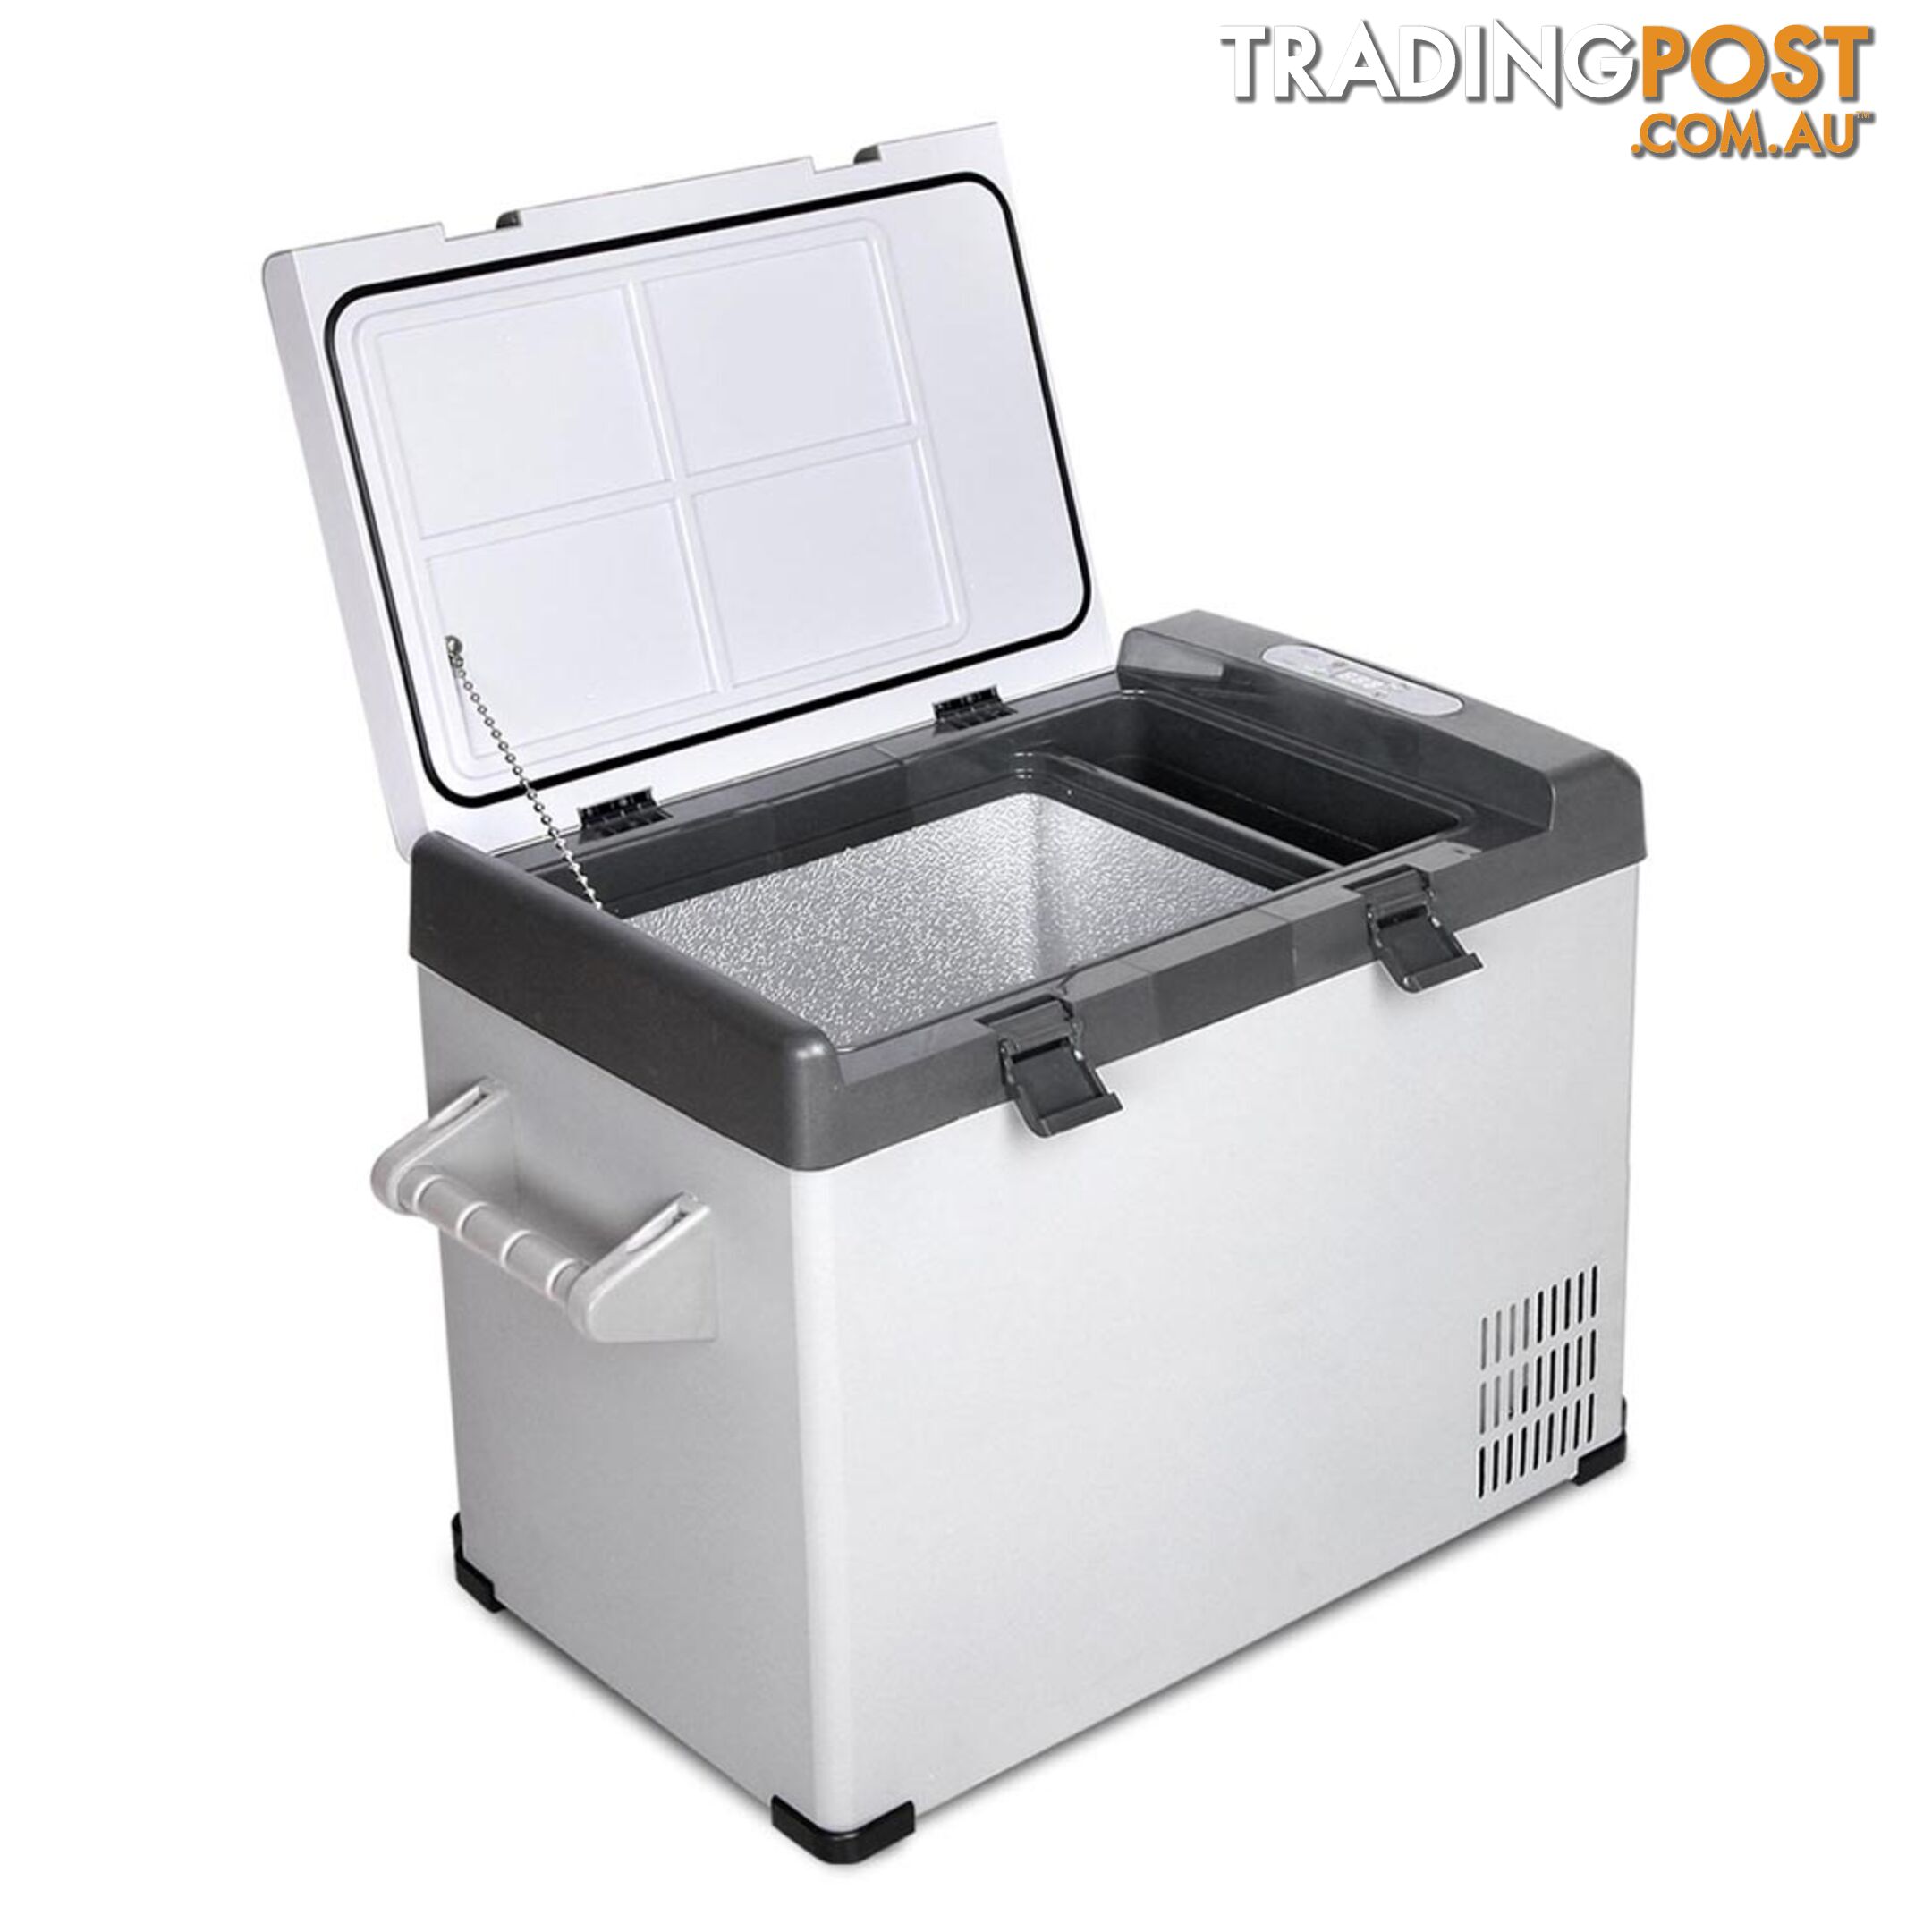 Portable Fridge & Freezer - Capacity 55L